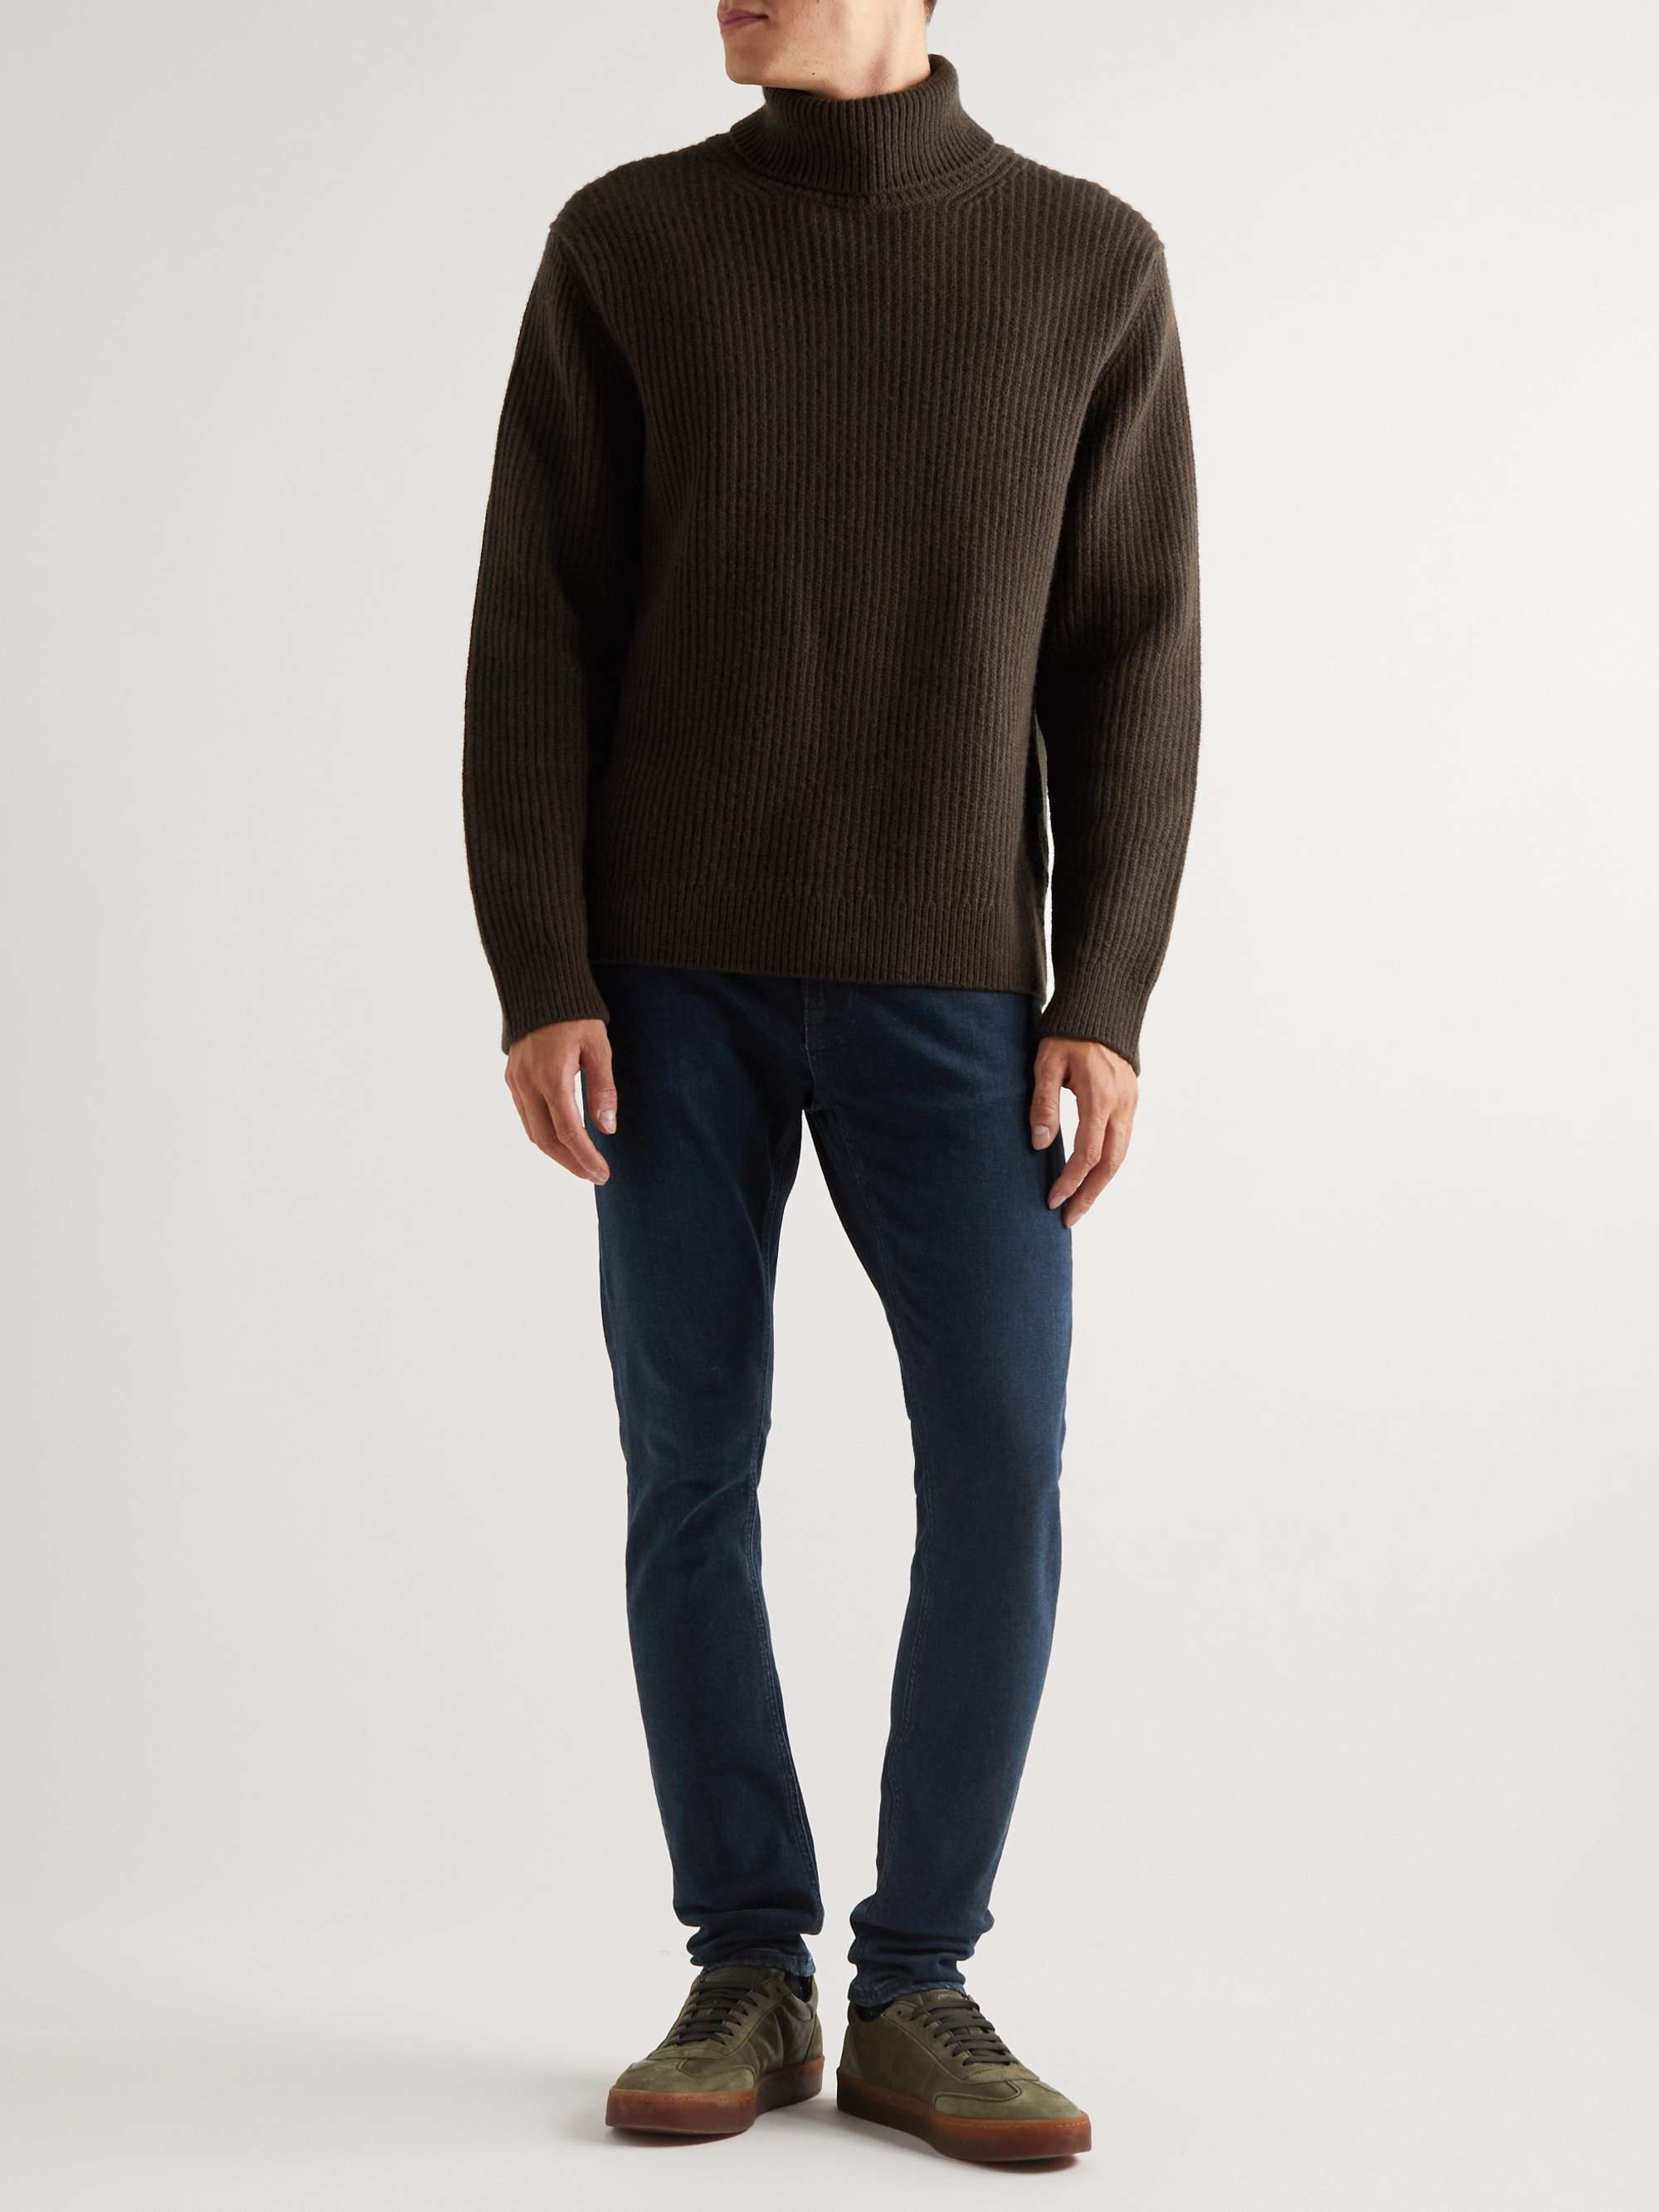 NUDIE JEANS August Wool Rollneck Sweater for Men | MR PORTER